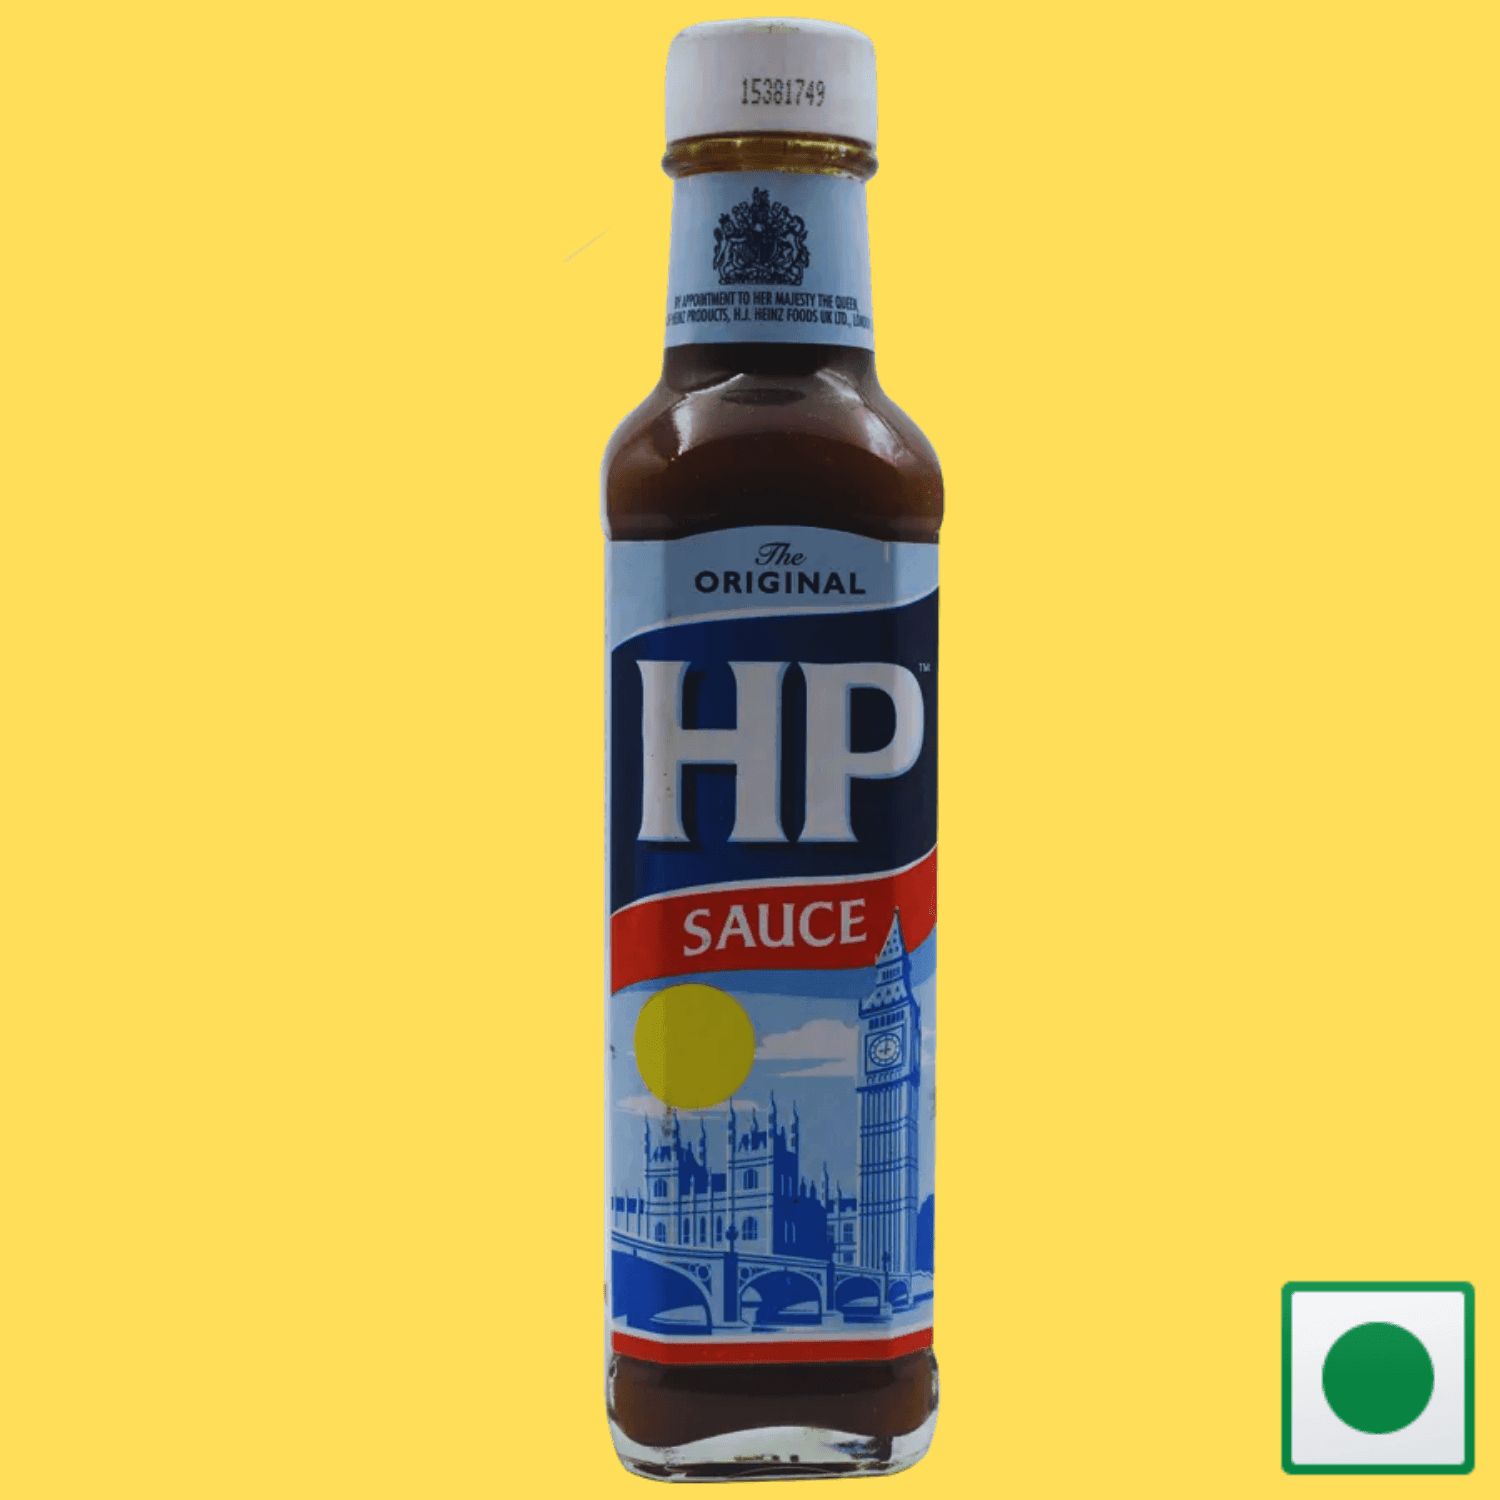 HP Original Sauce, 255g (Imported) - Super 7 Mart